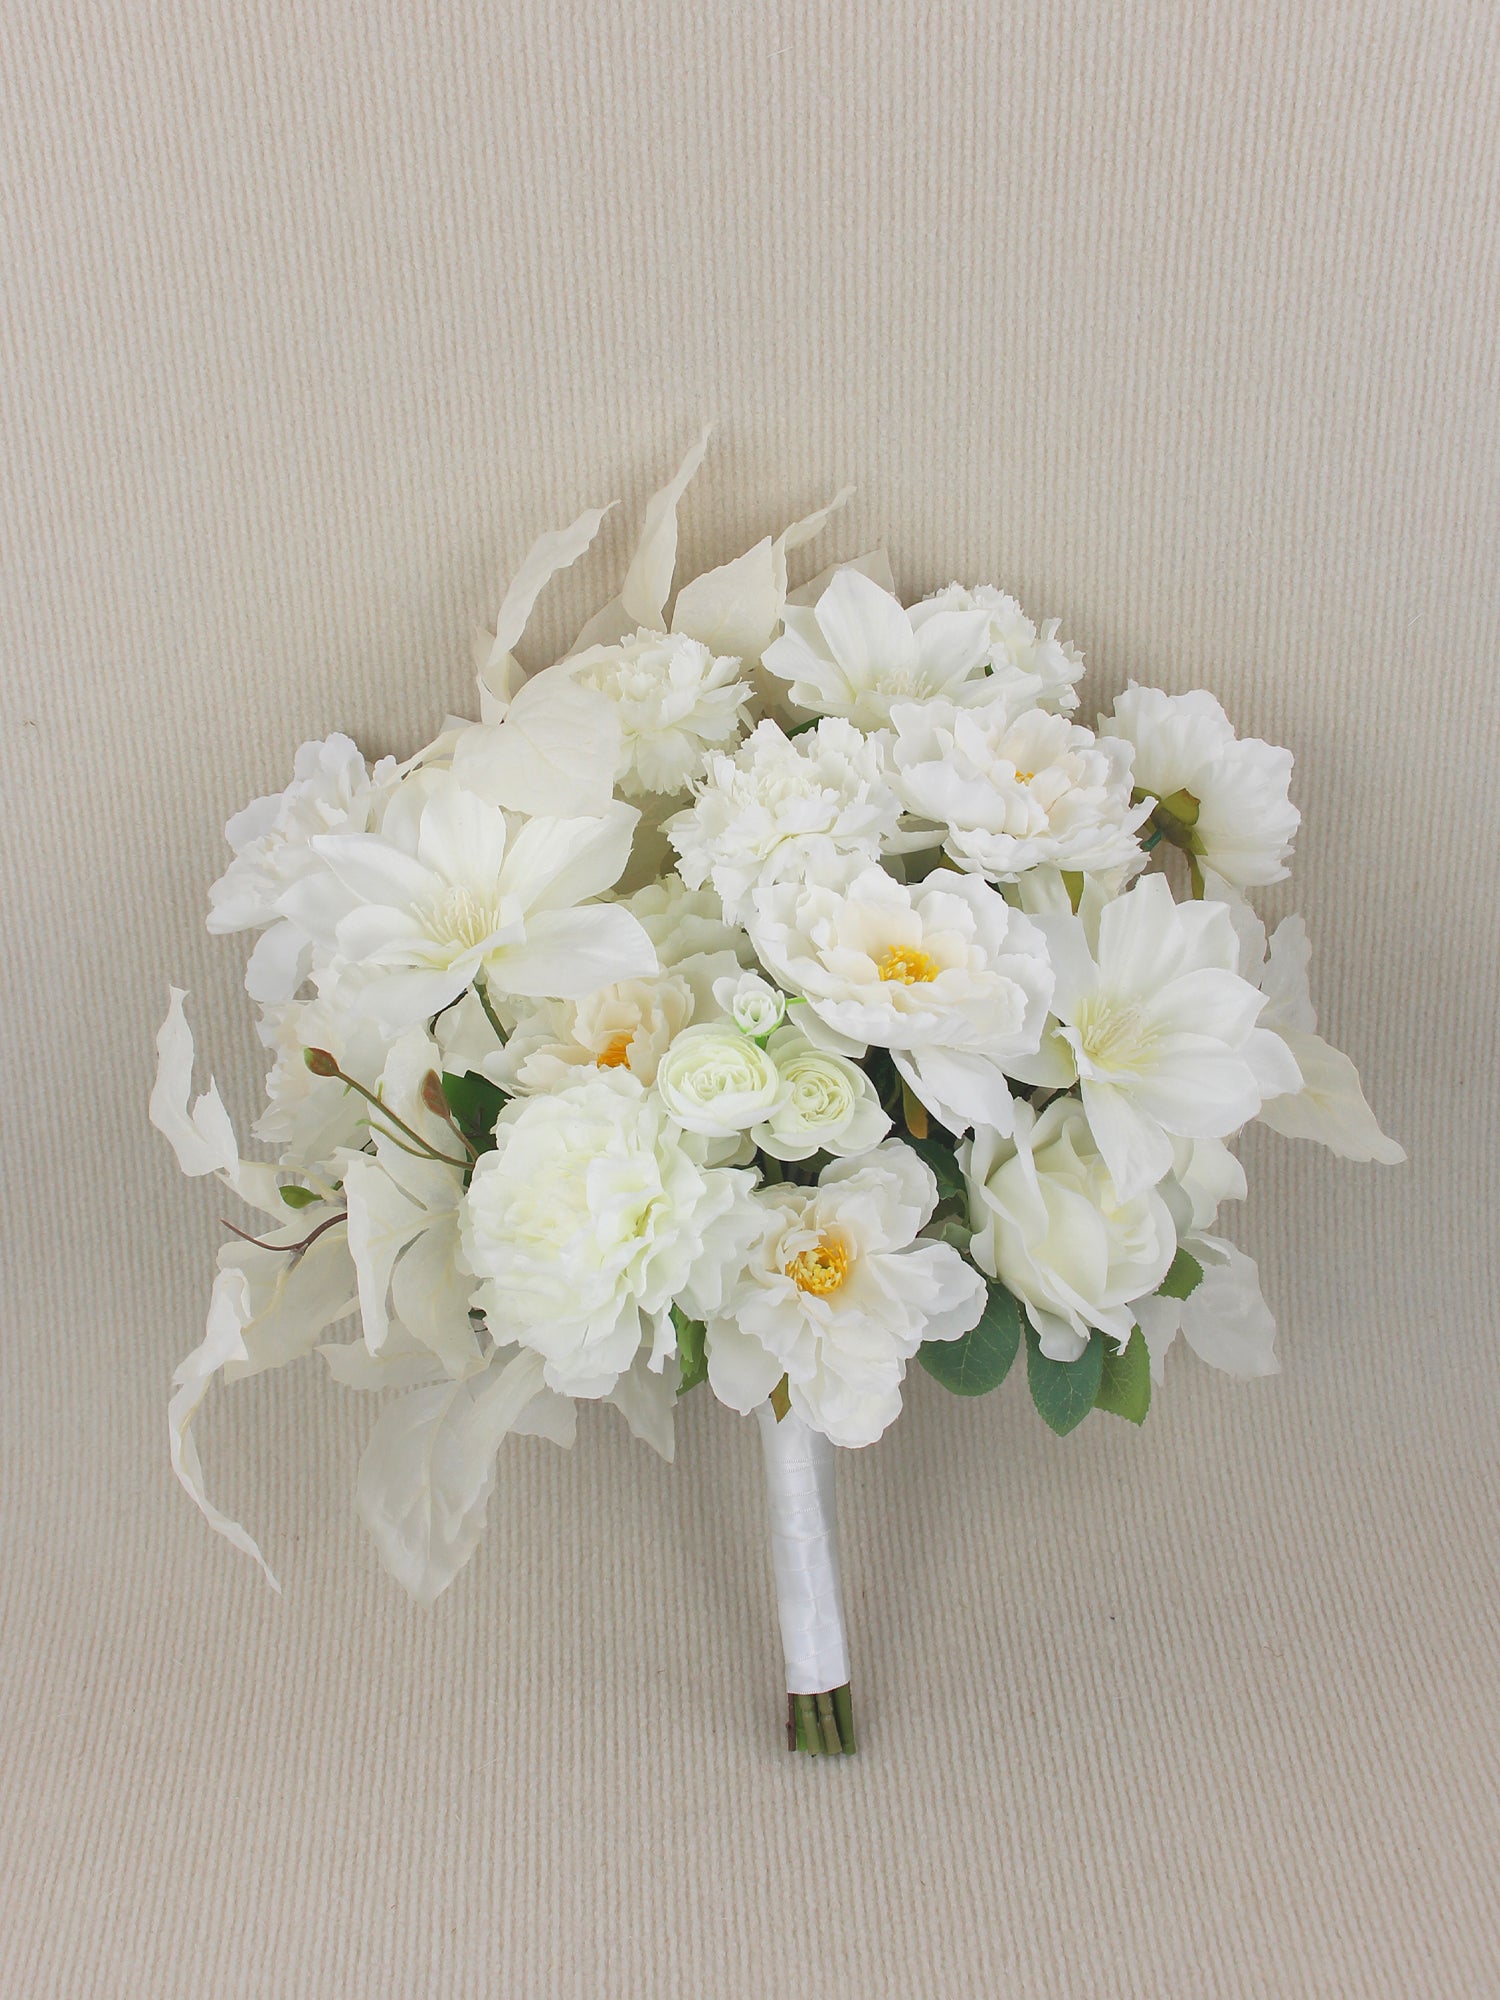 15 inch wide Pure White Bridal Bouquet